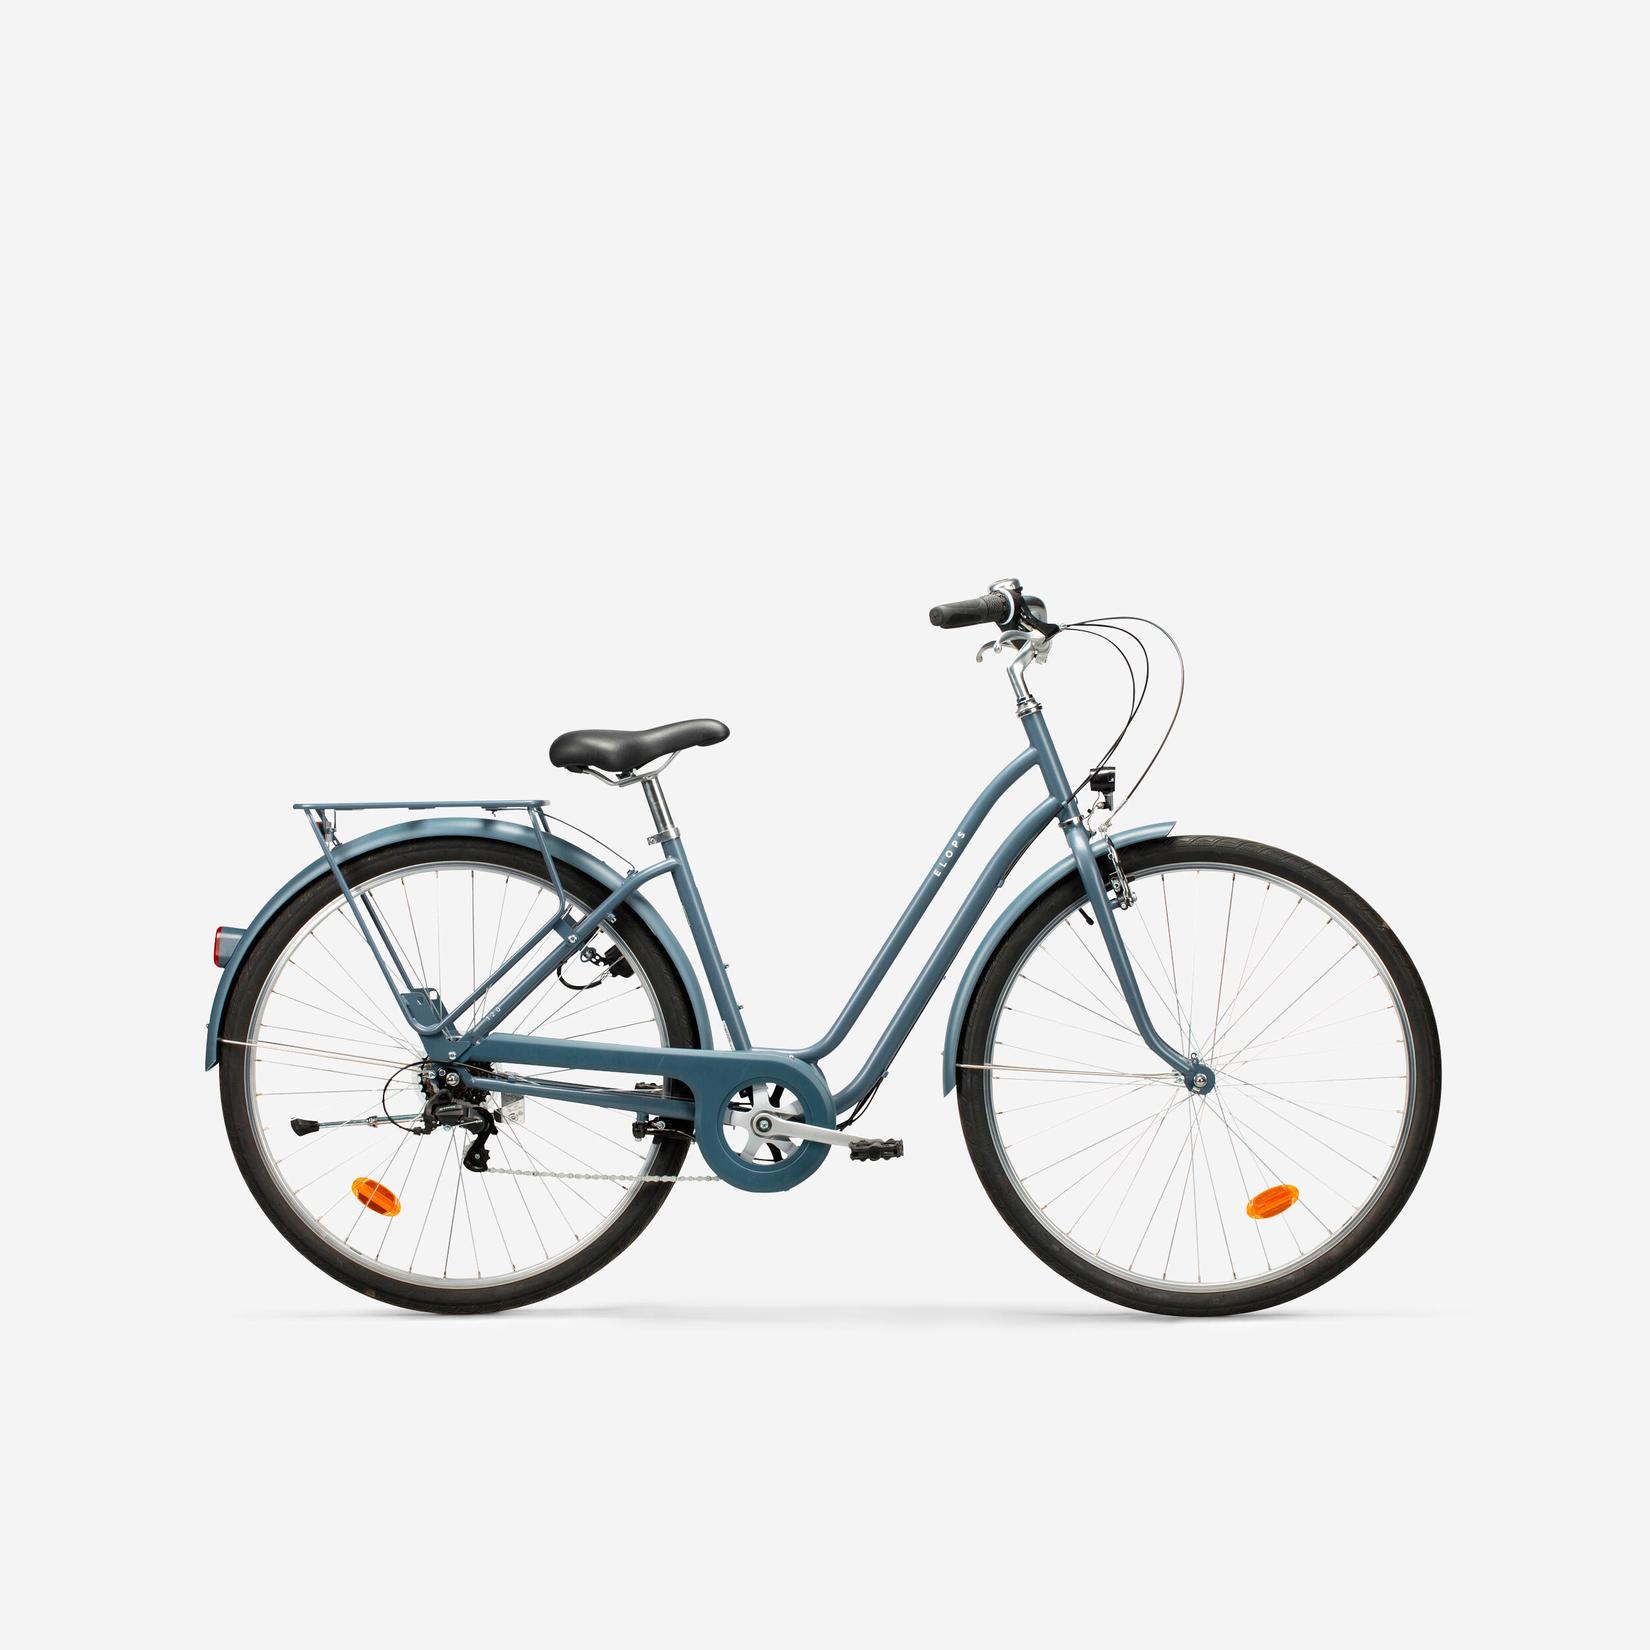 City Bike Low Frame - Elops 120 Blue/Grey offers at $380 in Decathlon